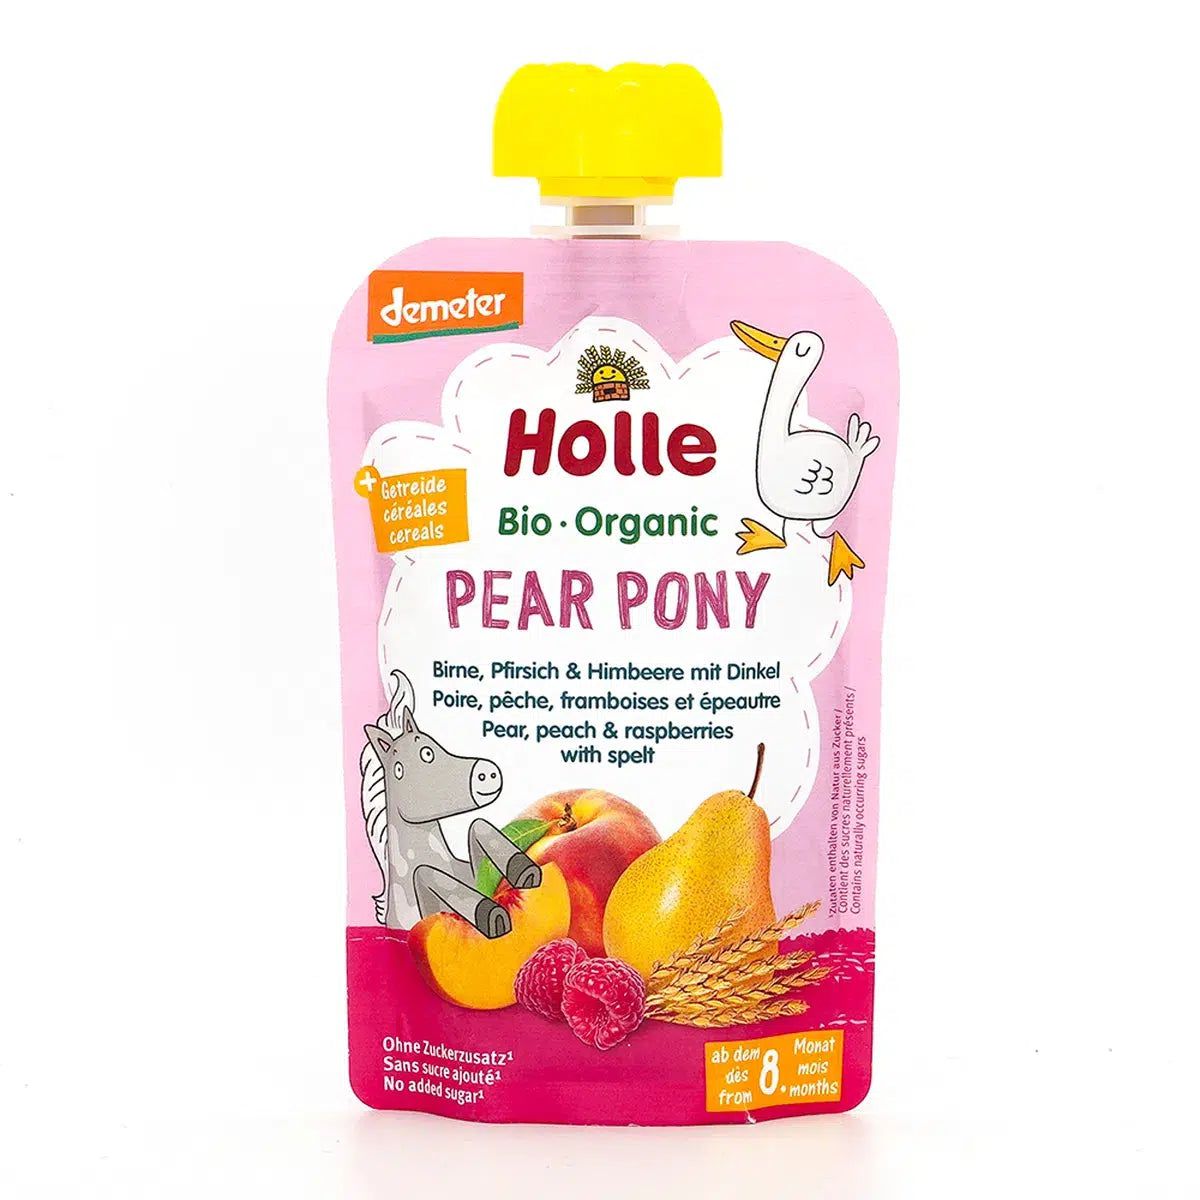 Holle Pear Pony: Pear, Peach, Raspberries & Spelt (8+ Months) - 12 Pouches